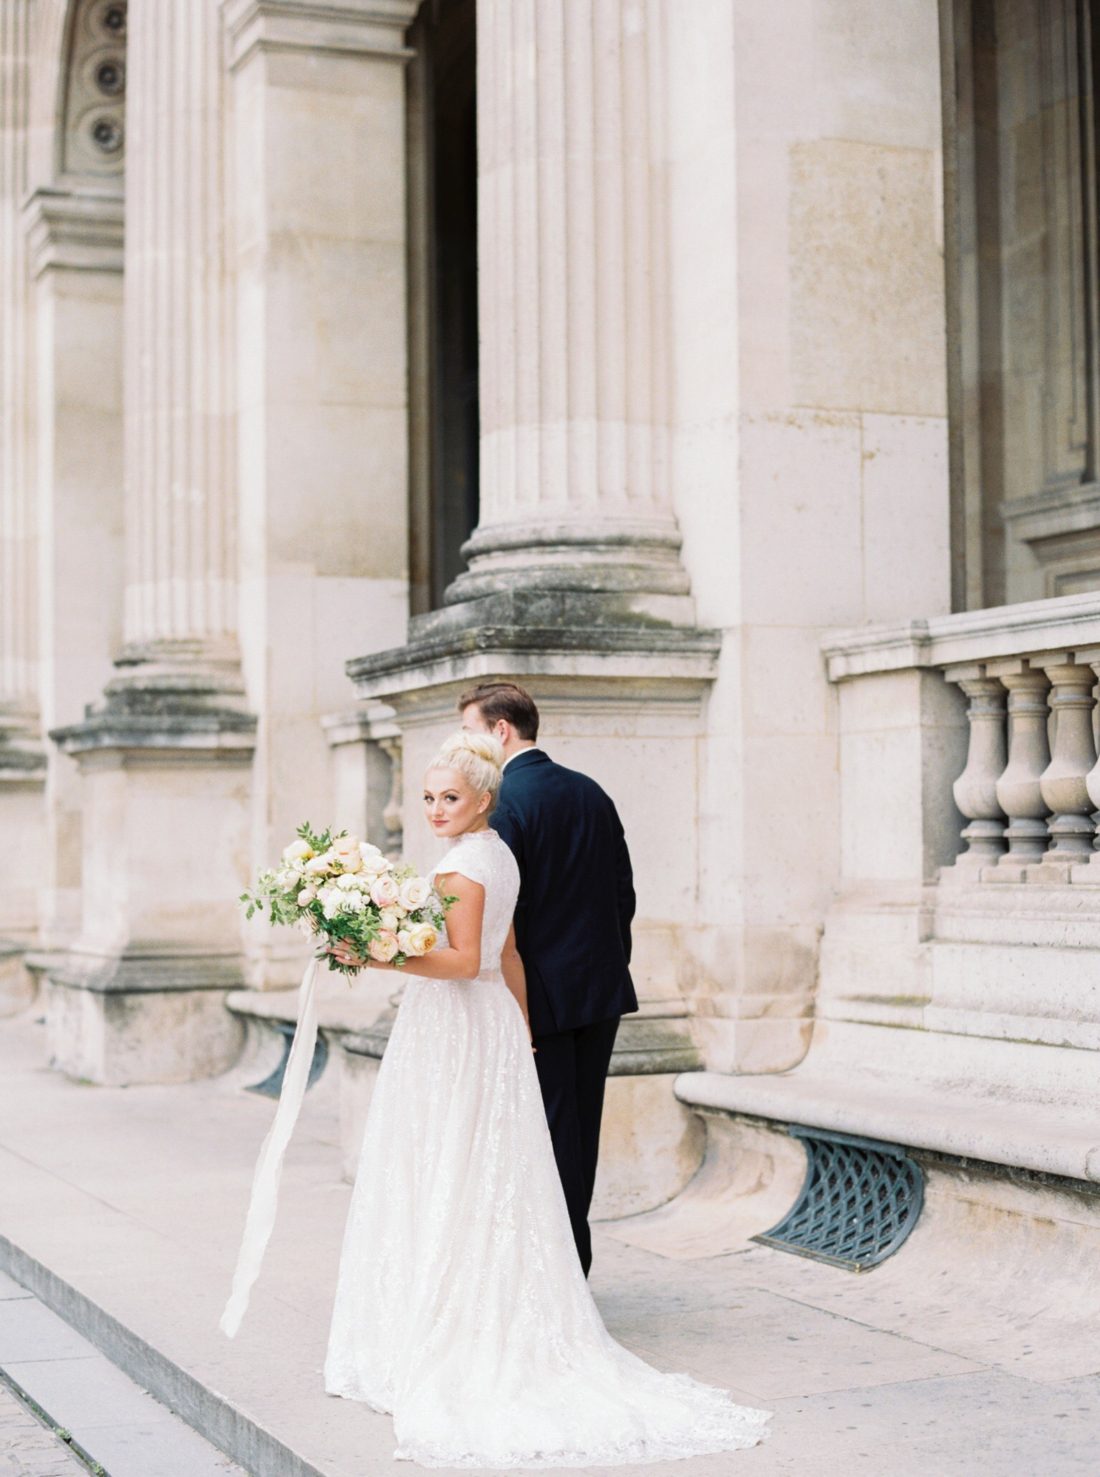 paris wedding planner rachael ellen events tips post photo 20